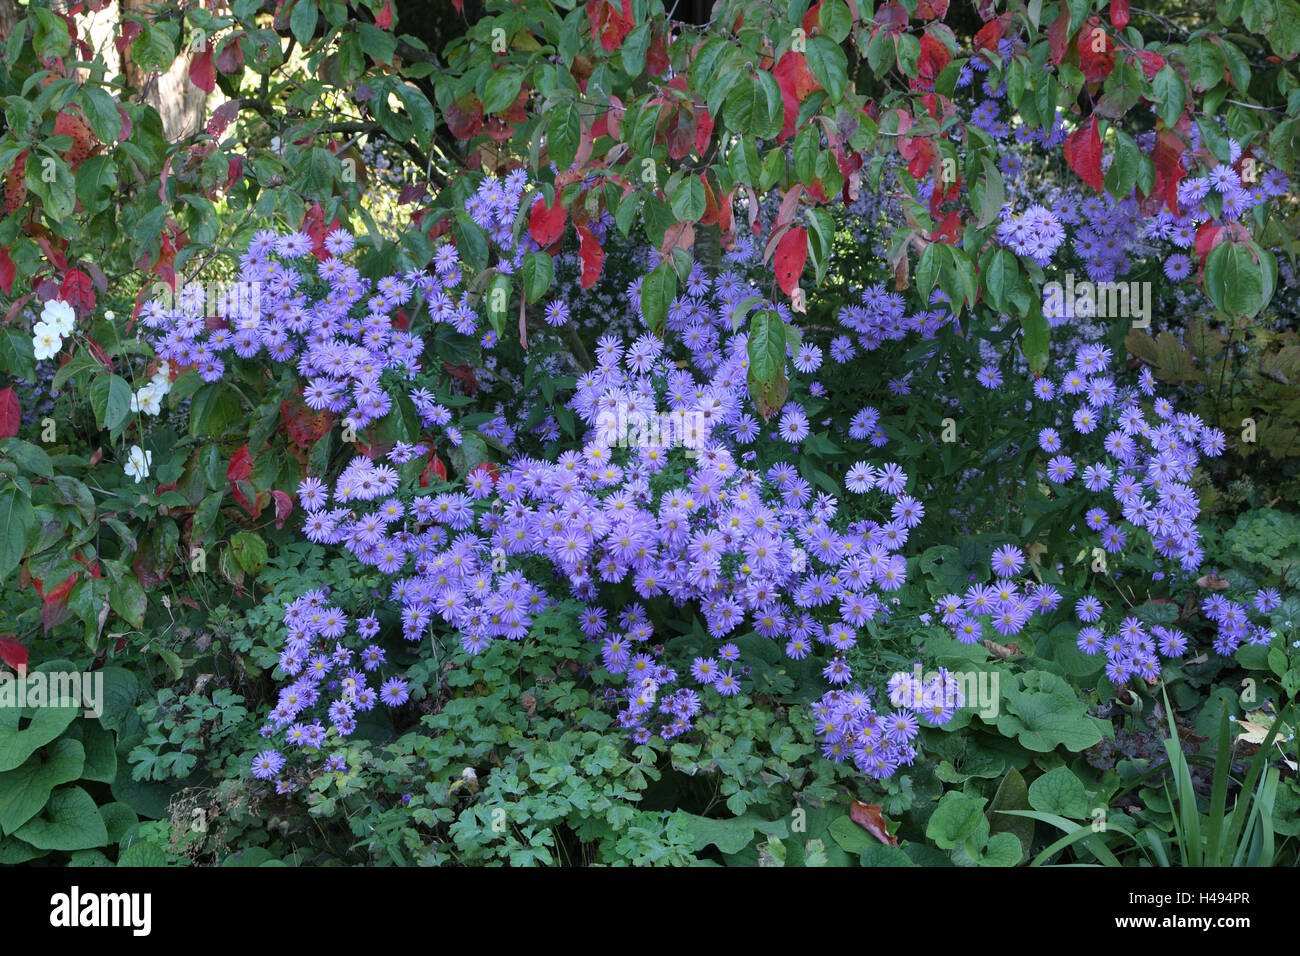 Garden, flowers, plants, autumn asters, Stock Photo